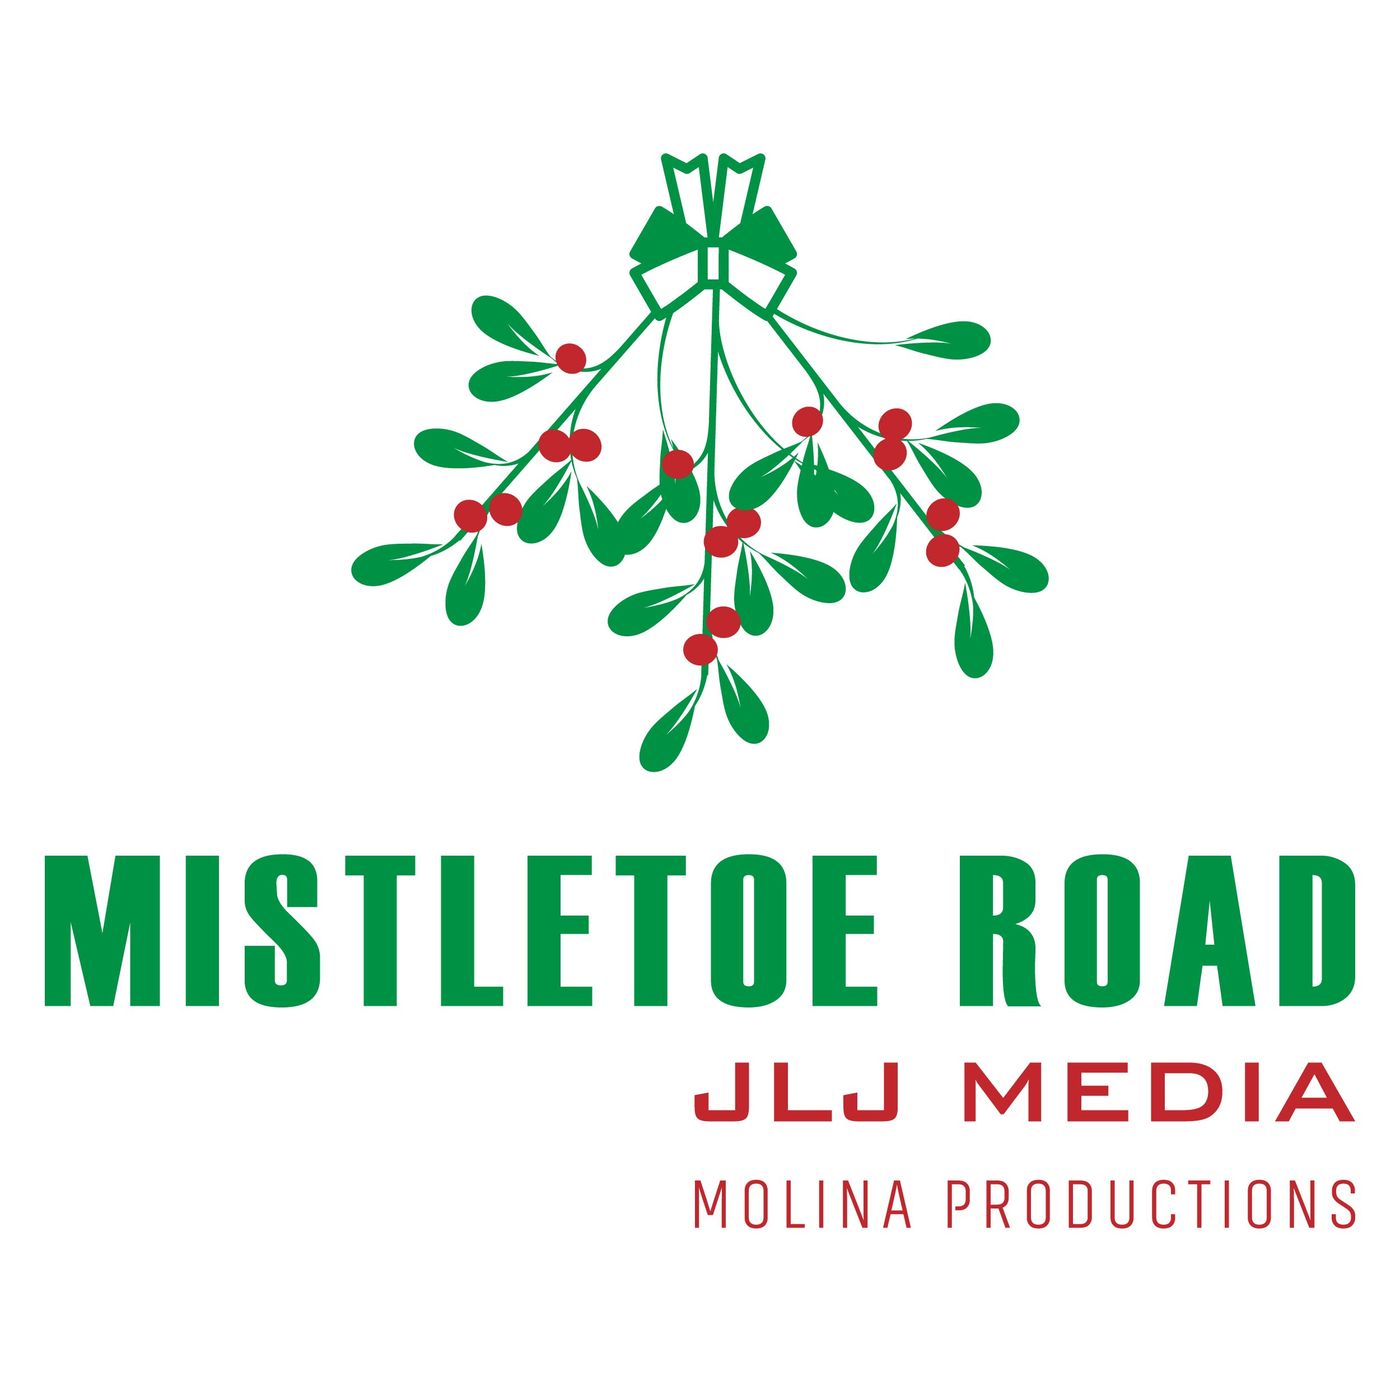 Mistletoe Road